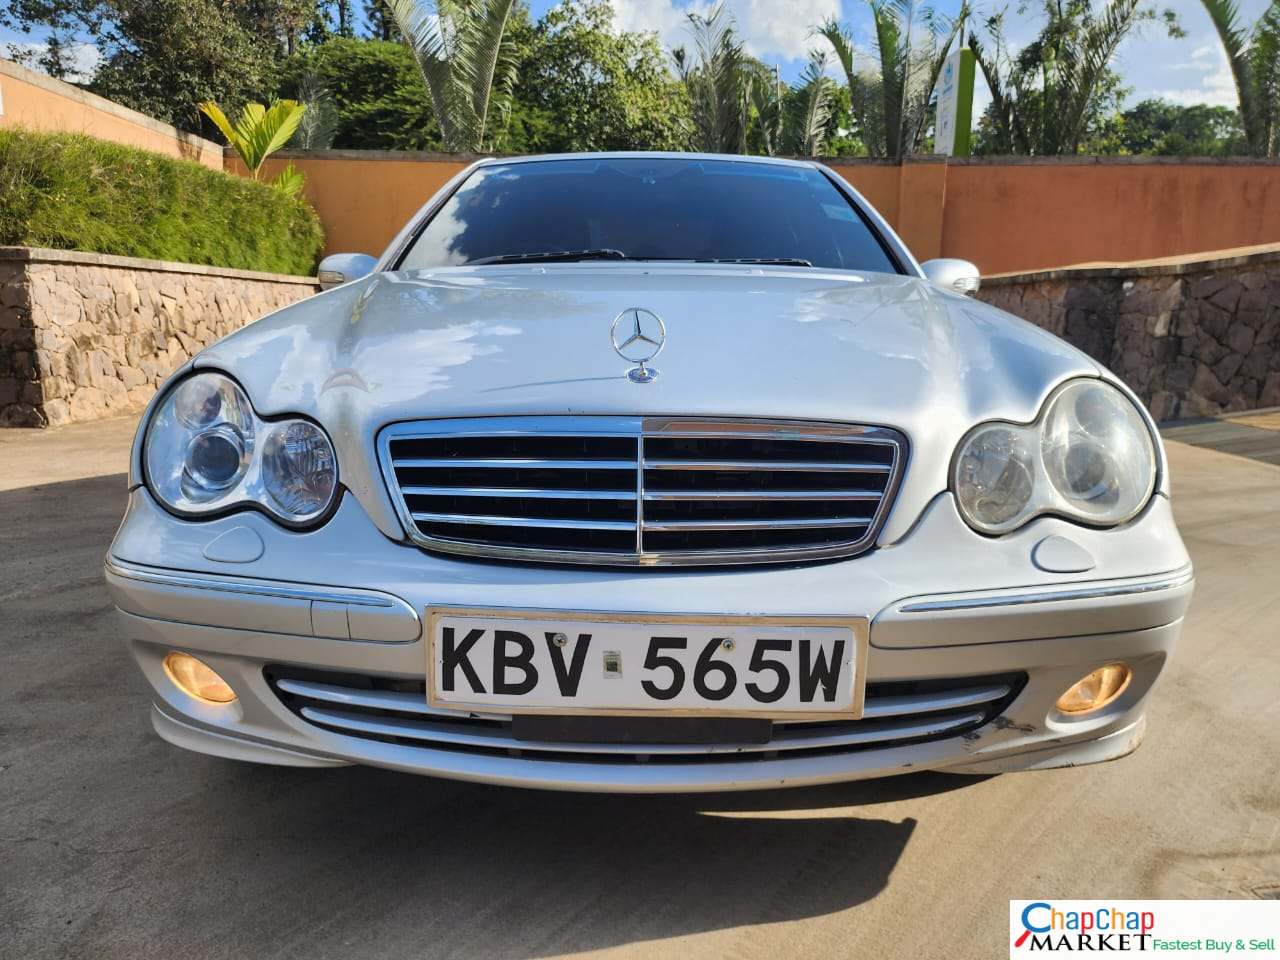 Mercedes Benz C180 for sale in Kenya ðŸ”¥ You Pay 30% DEPOSIT Trade in OK EXCLUSIVE – ChapChap Market